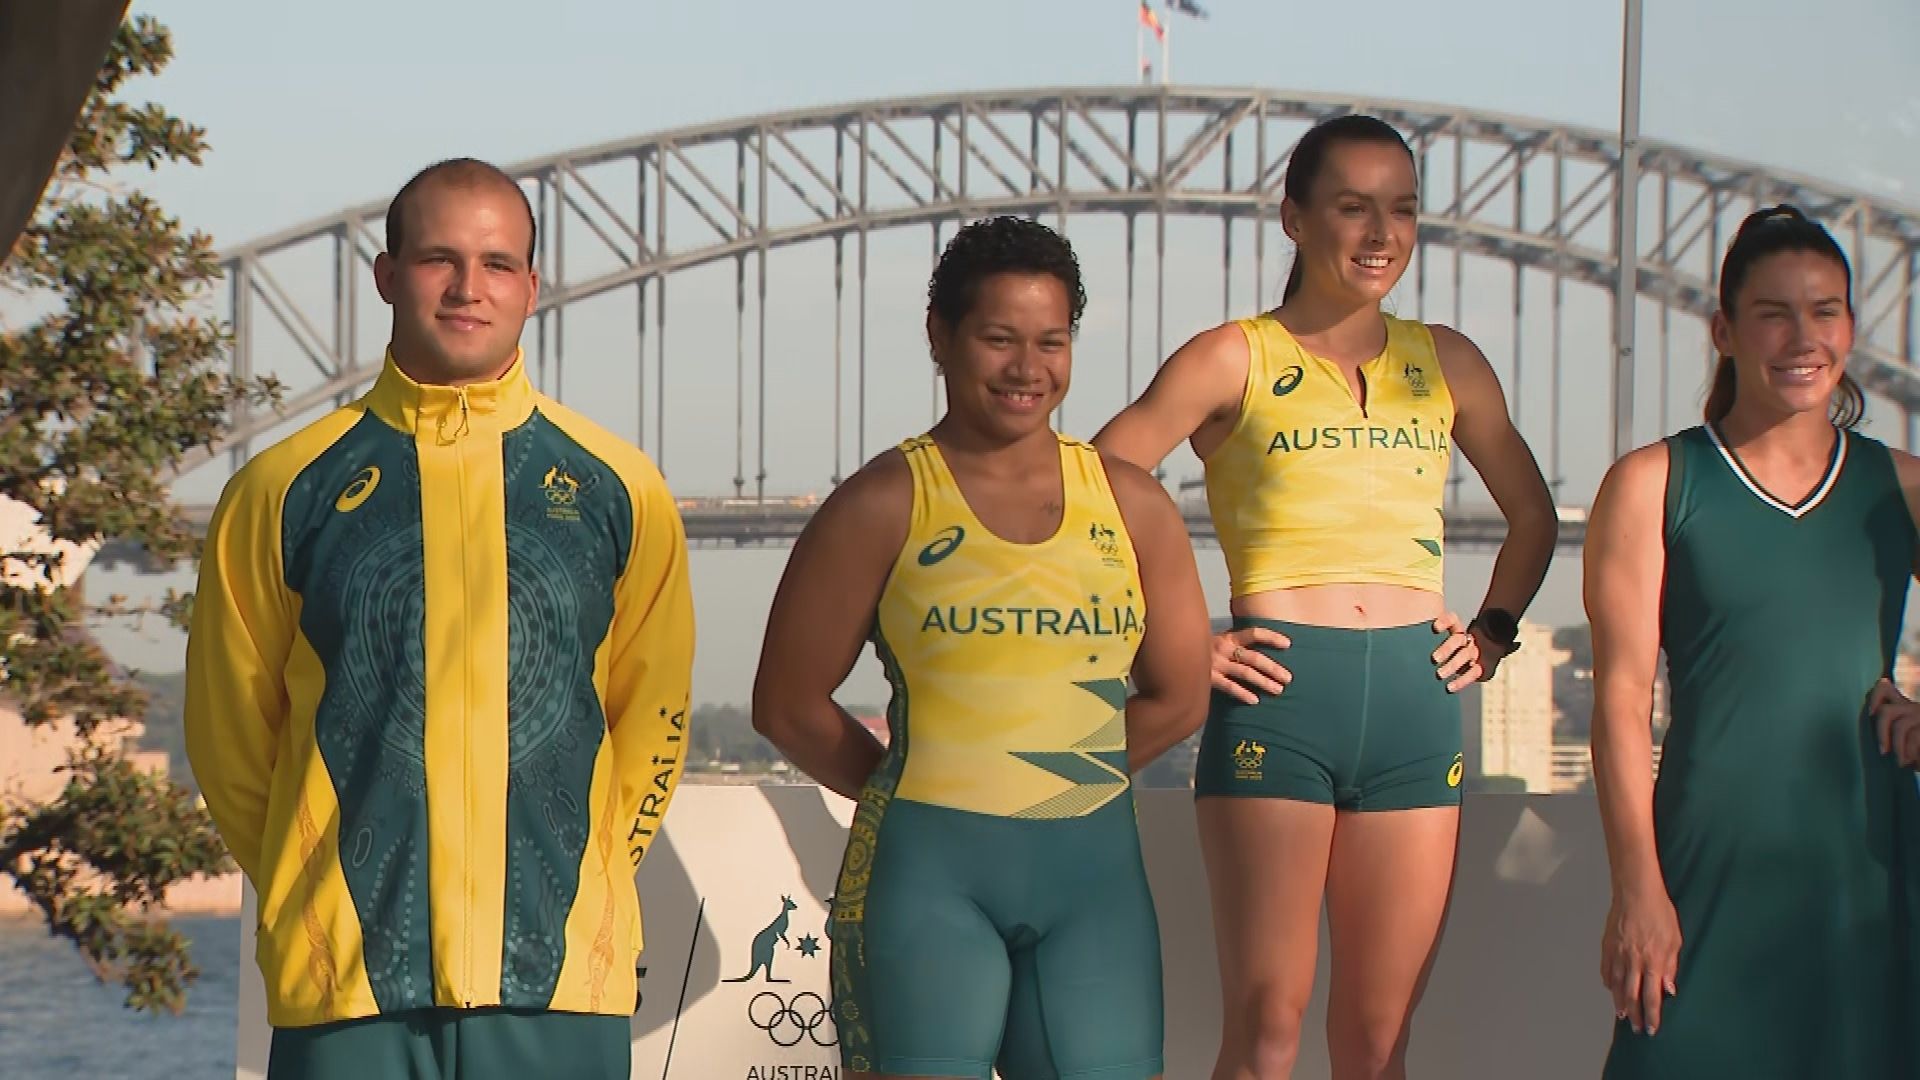 Australian athletes show off the official Paris 2024 kits.